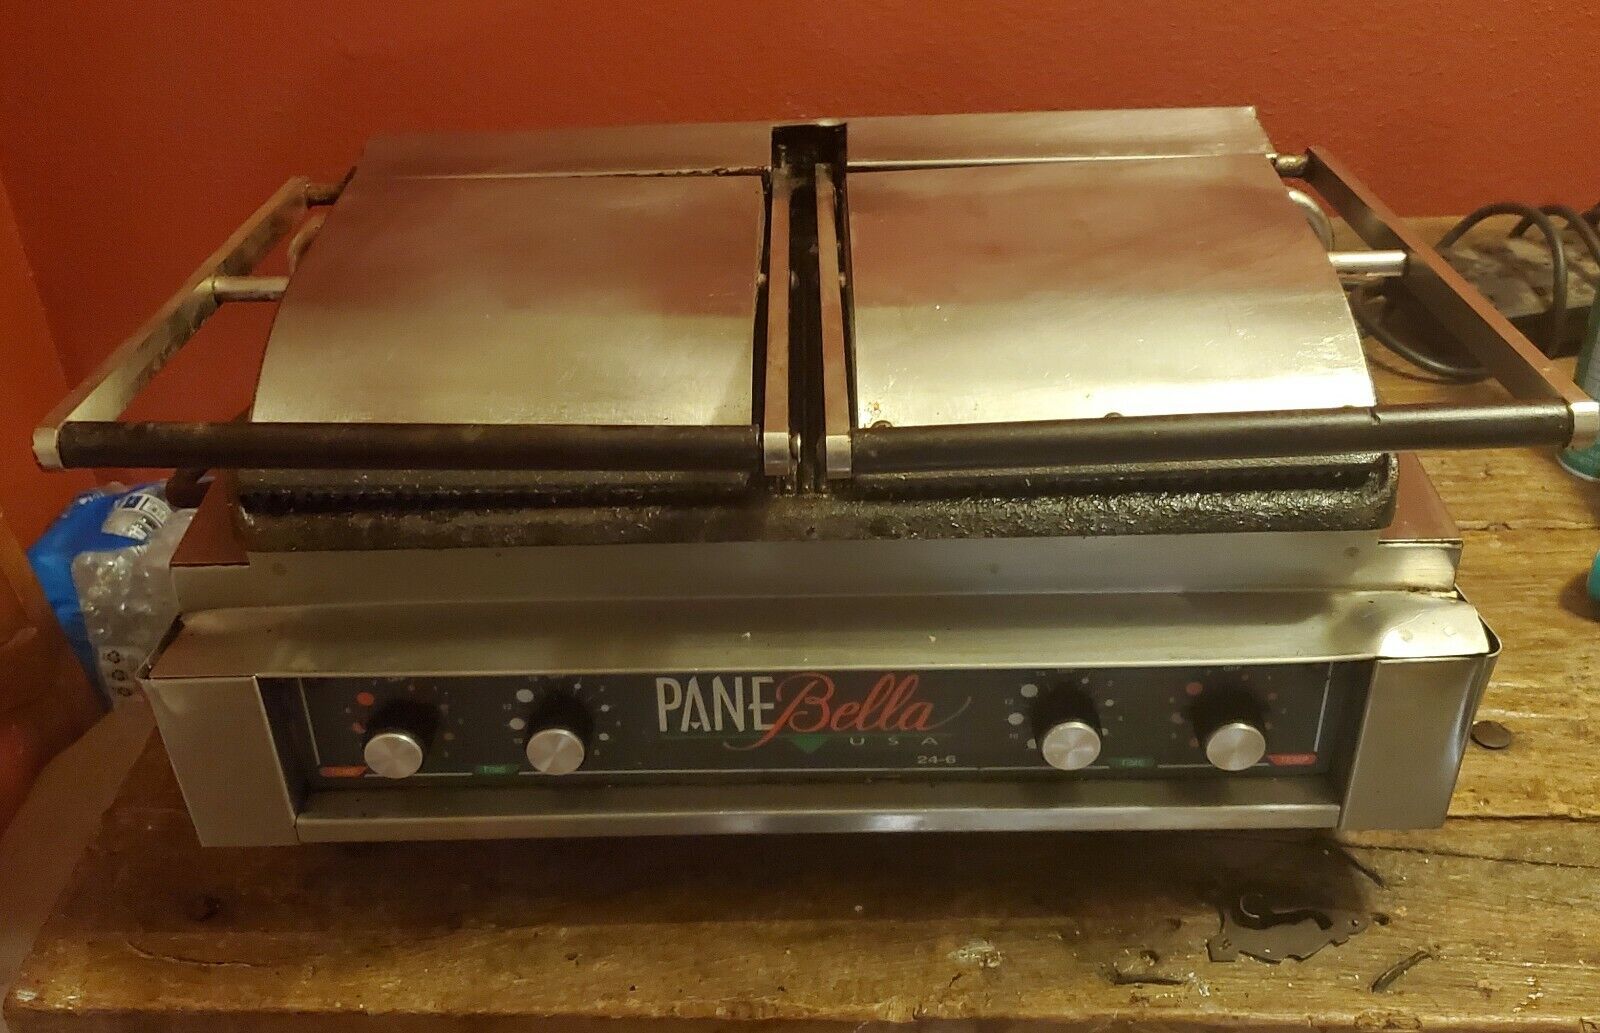 Panini Press Commercial Restaurant Lang Panini Grill, Pb-24 Heavy Duty.